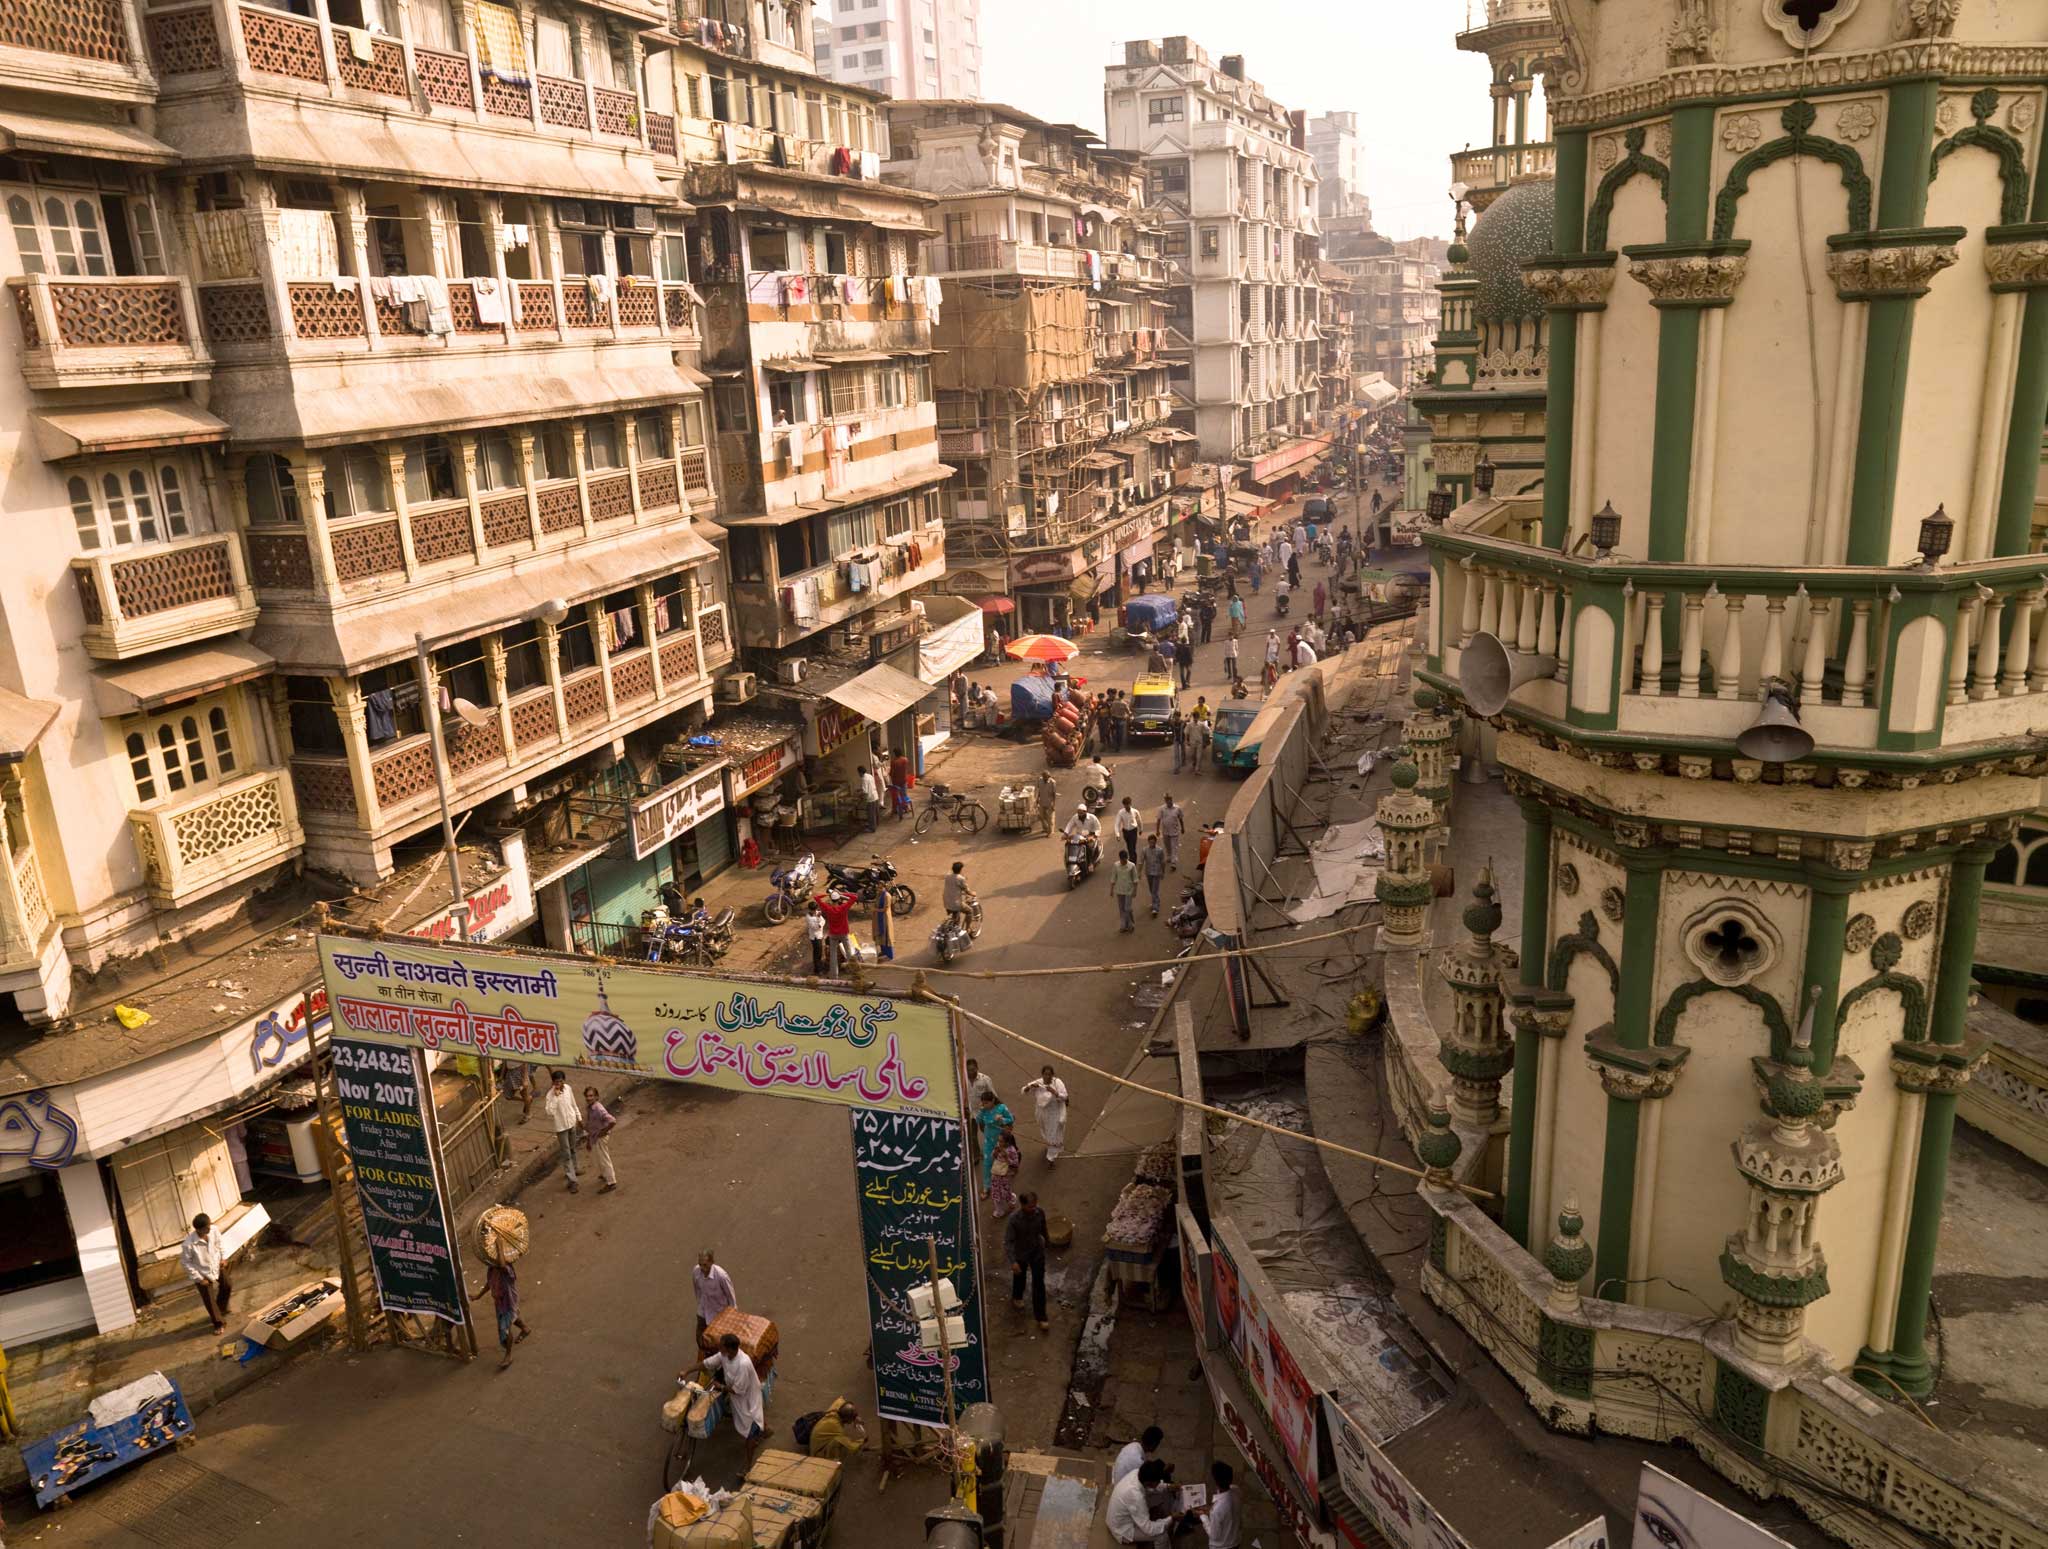 History seen through urban design: A street corner in Mumbai